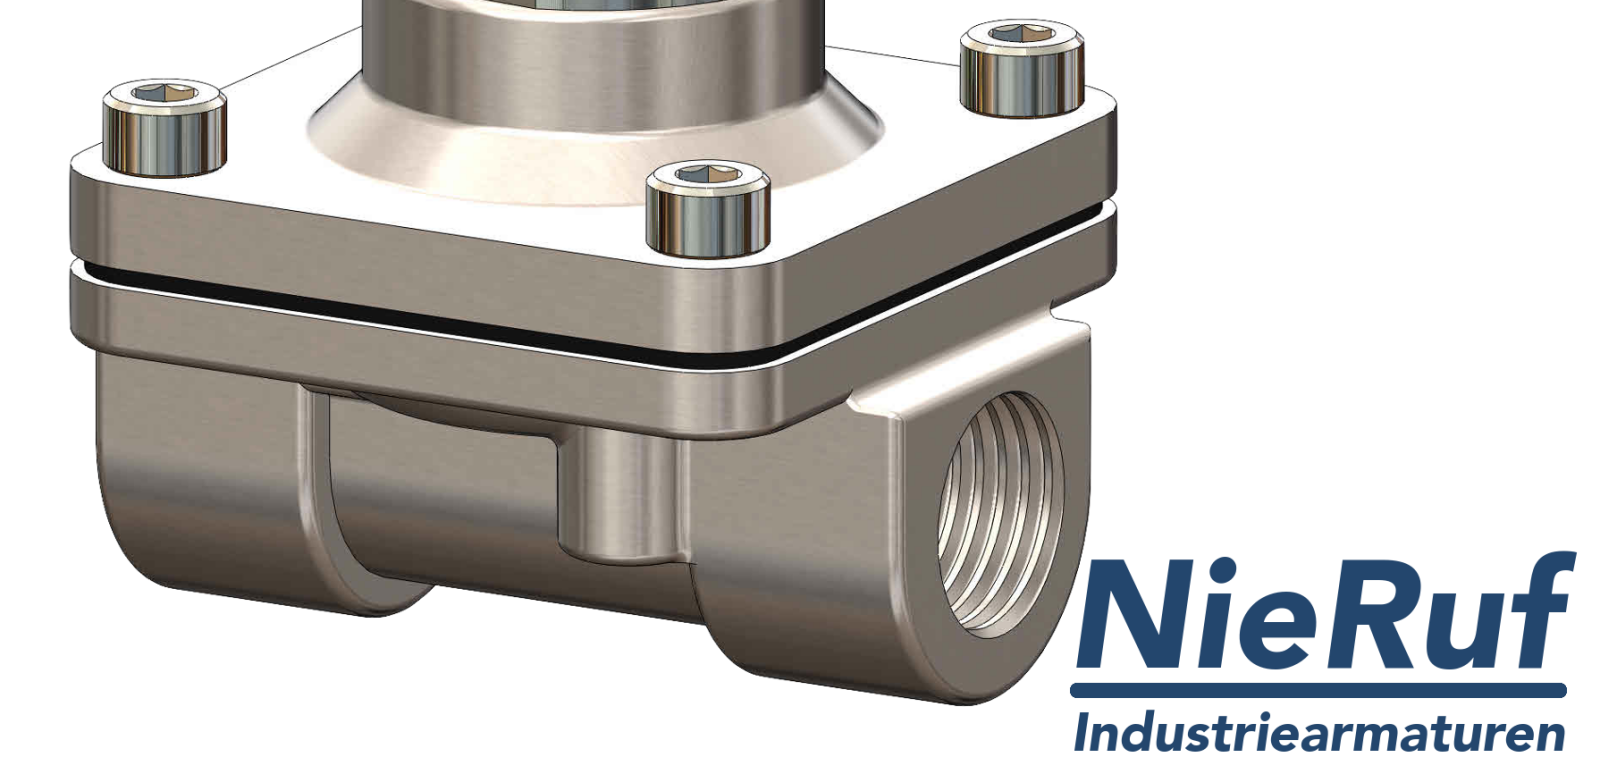 Solenoid valve DN25 G 1" Inch FKM 110V stainless steel 1.4308